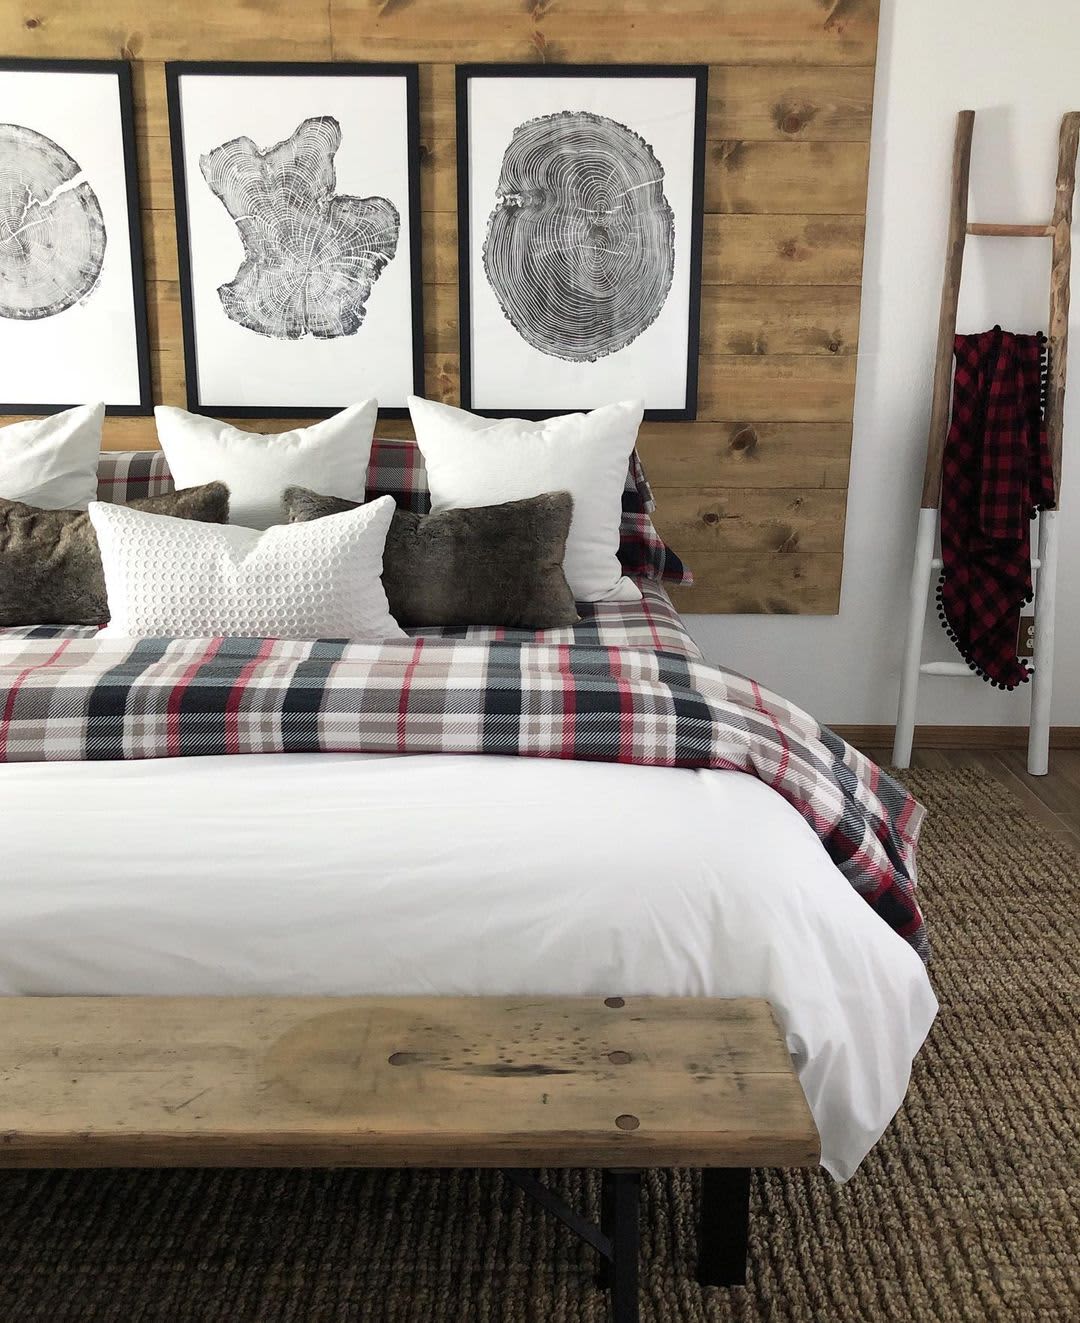 Beige Master Bedroom with Rustic Furniture